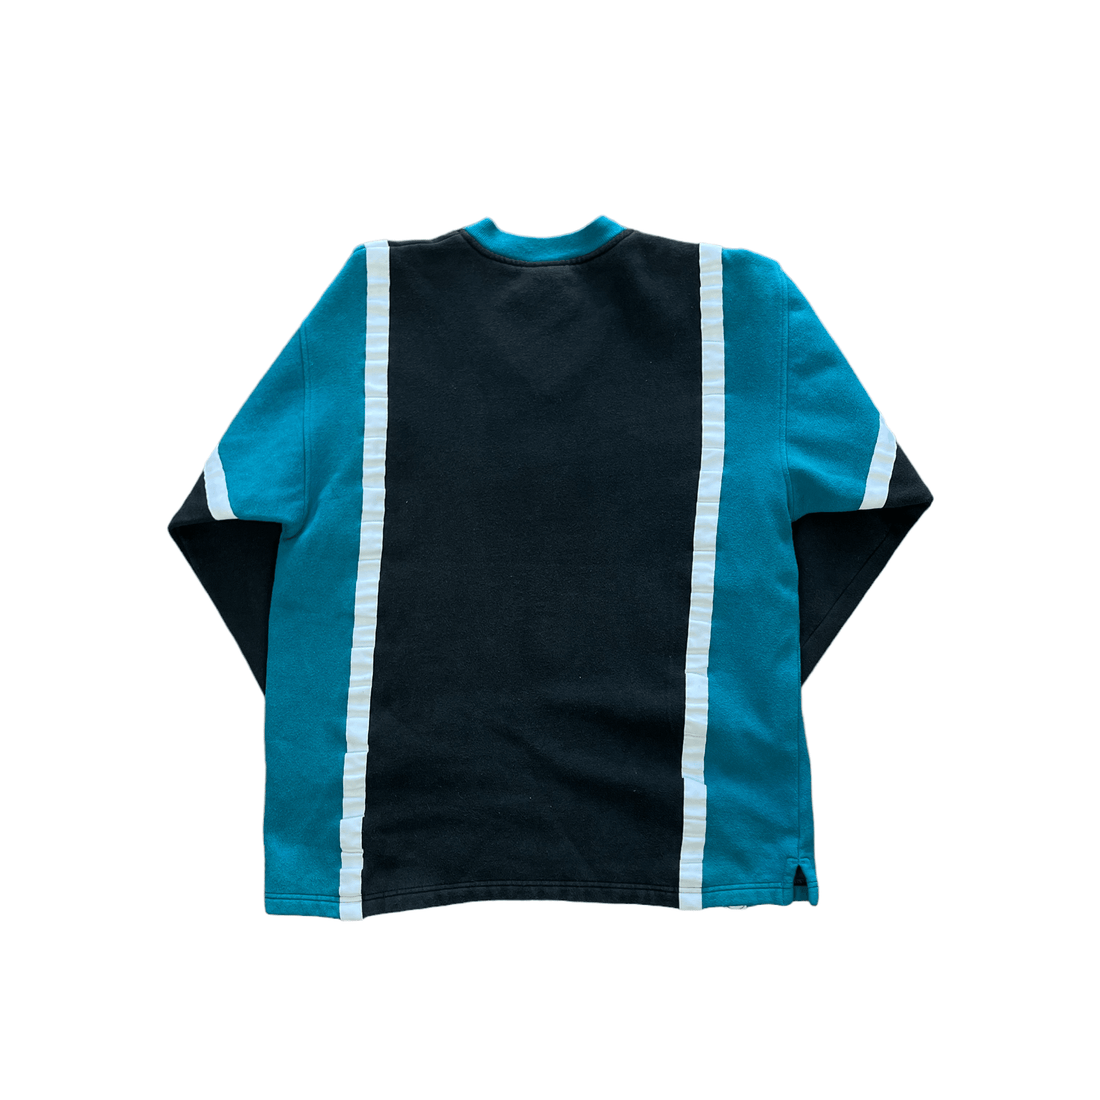 Vintage 90s Black, Blue + White Champion Sweatshirt - Medium - The Streetwear Studio